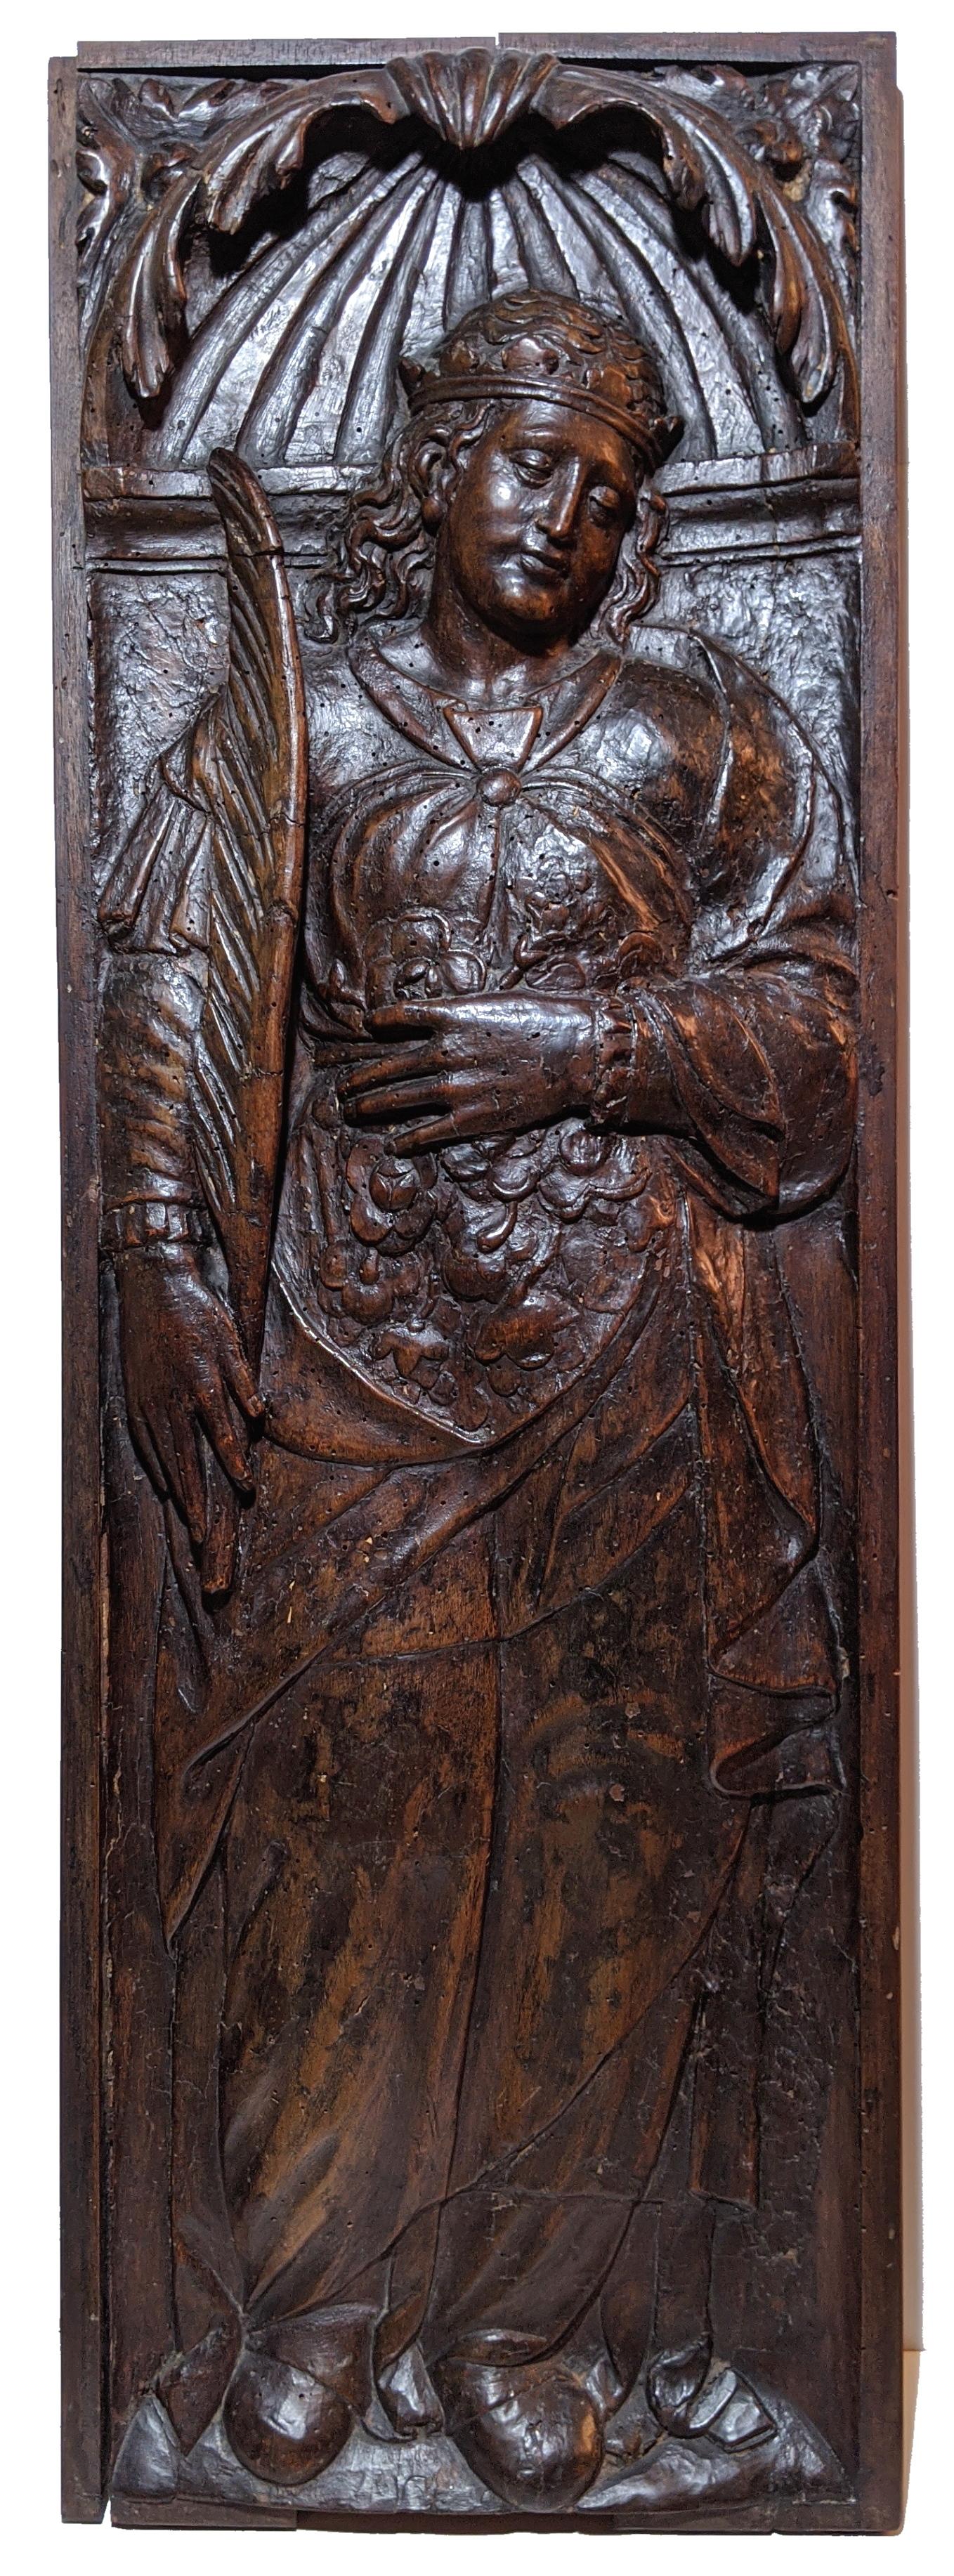 Unknown Figurative Sculpture - Renaissance Panel - St. Elizabeth Of Hungary